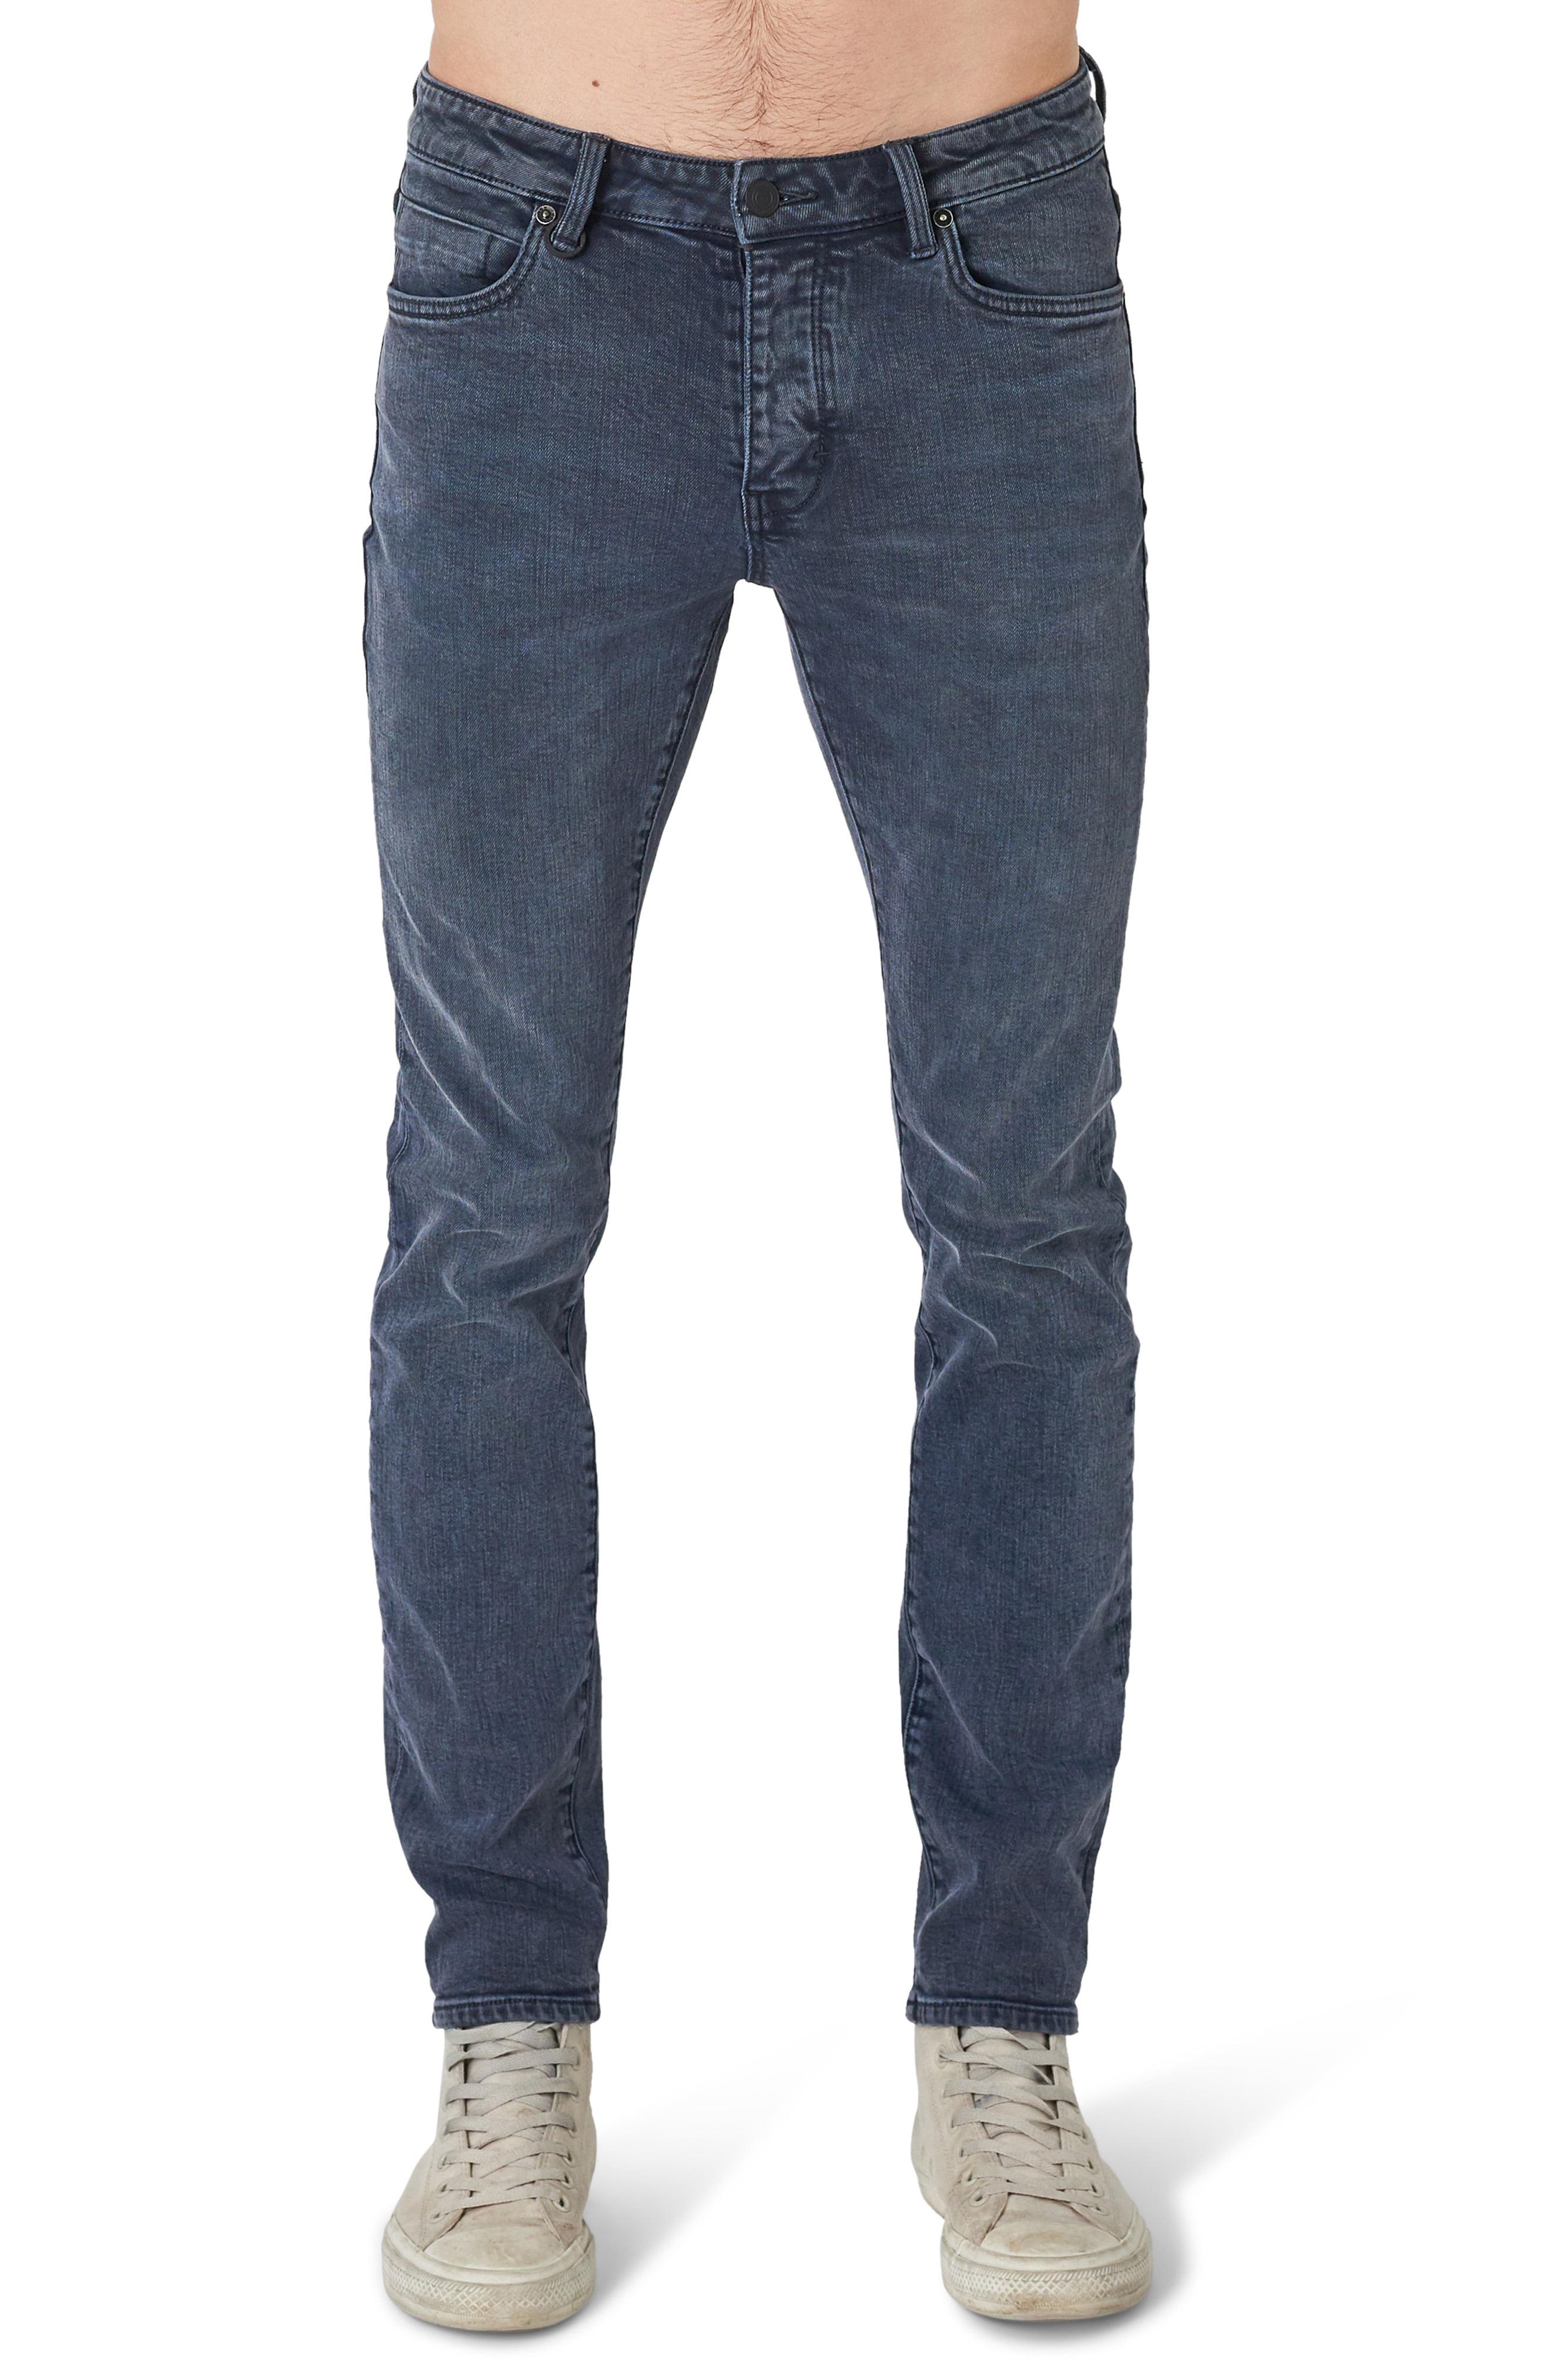 Neuw Denim Iggy Skinny Fit Jeans in Blue for Men - Lyst